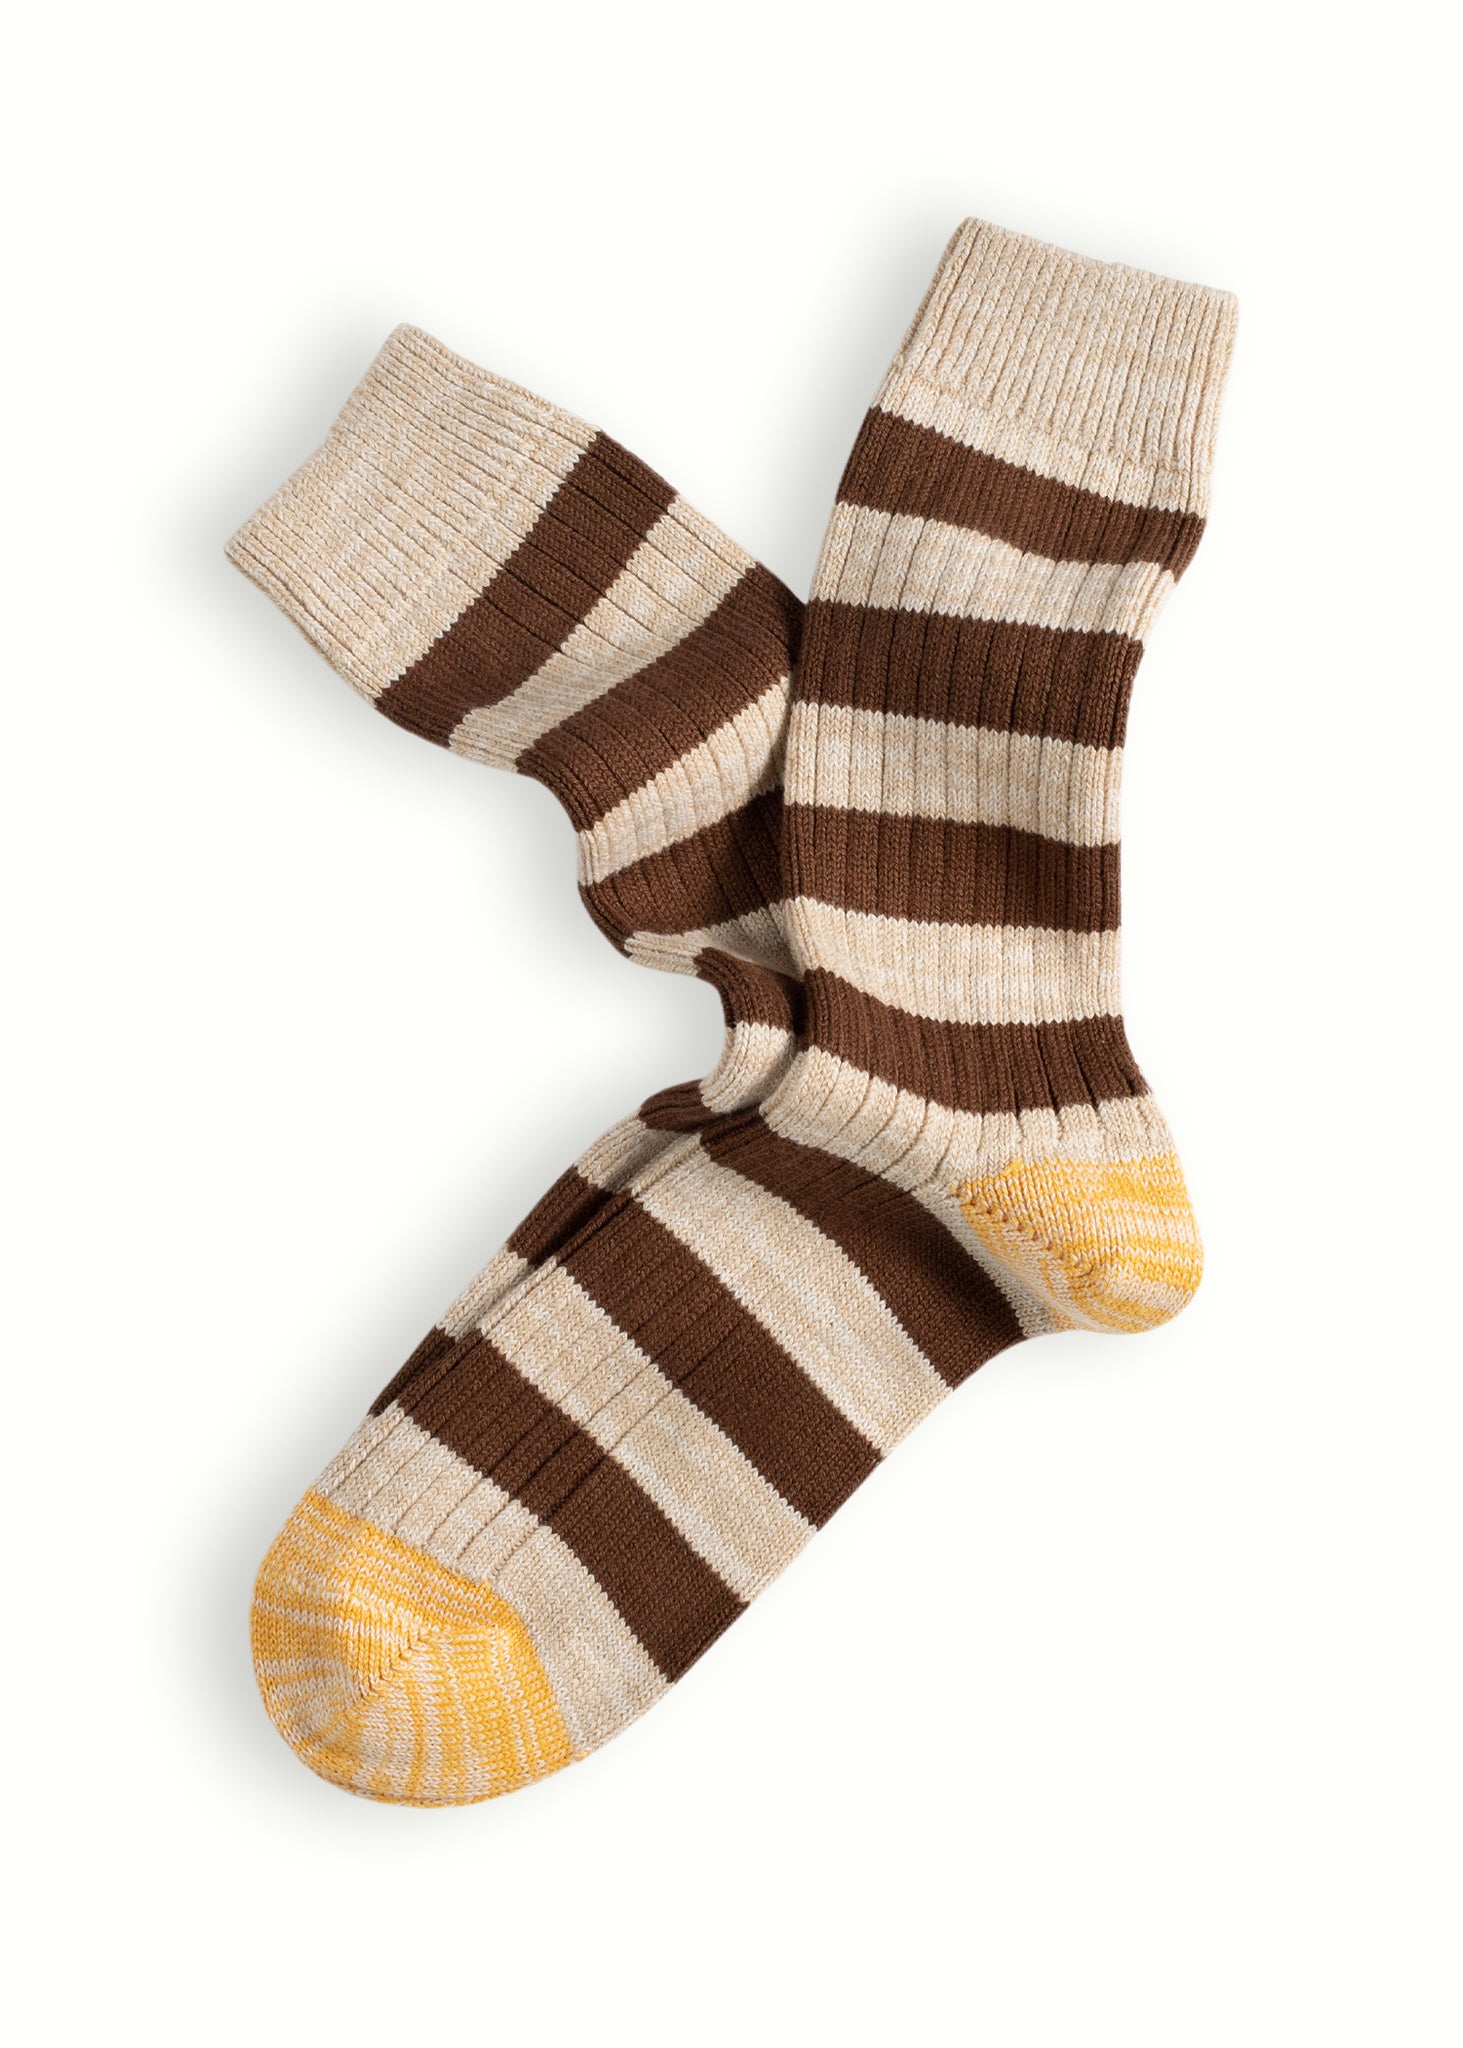 Thunders Love Nautical Striped Brown and Beige Socks